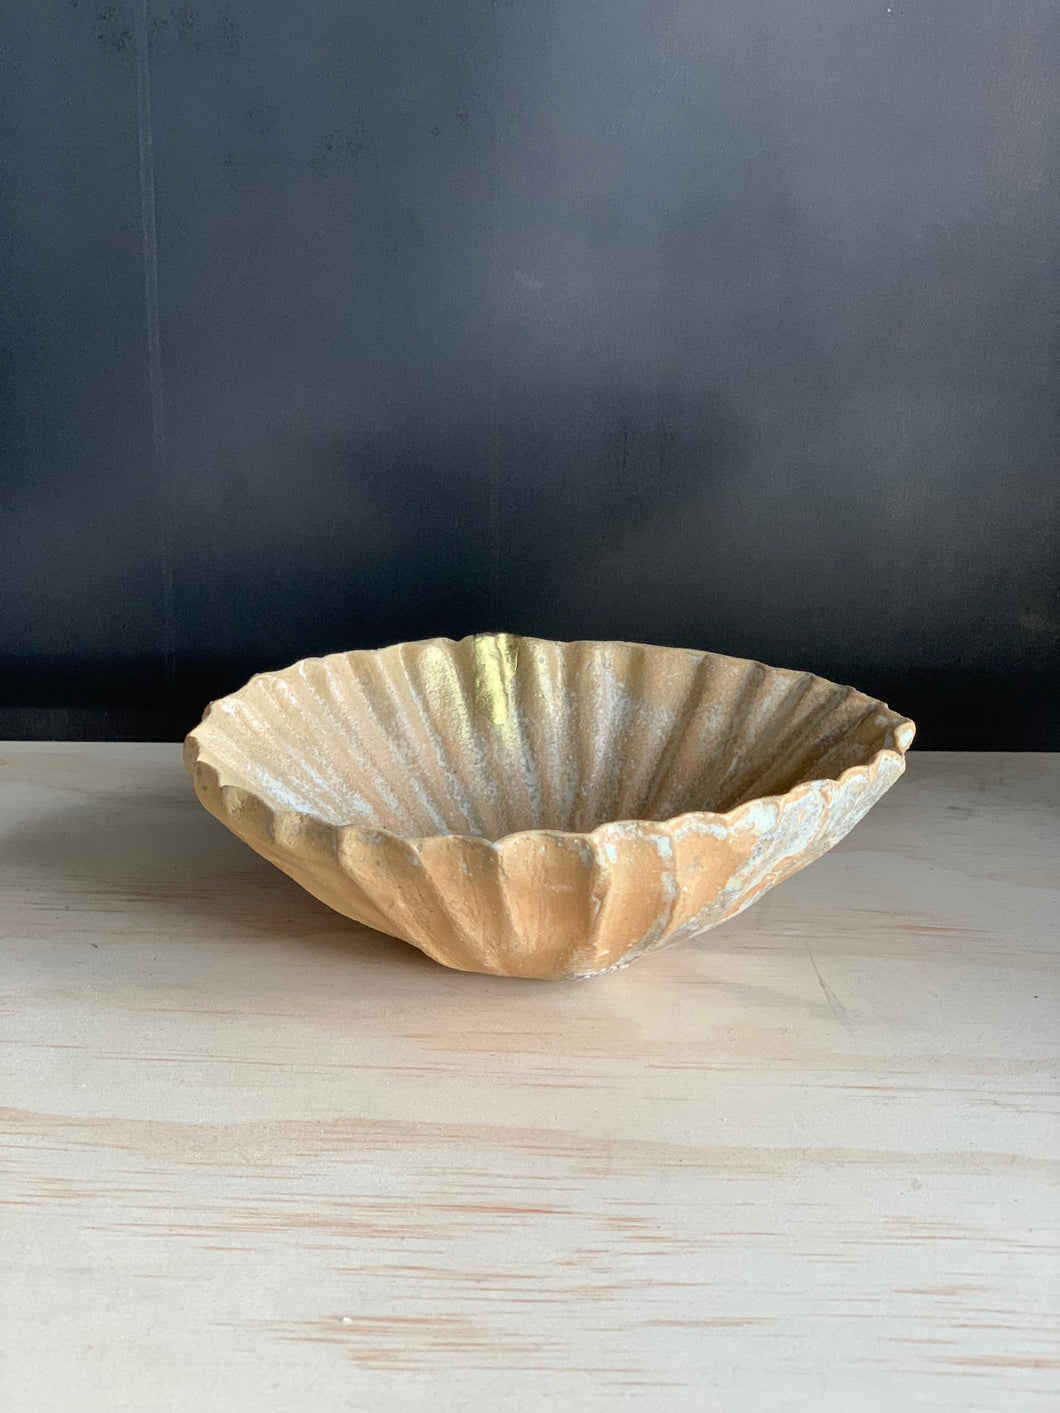 Kintsugi ceramic #2 by wonder journal